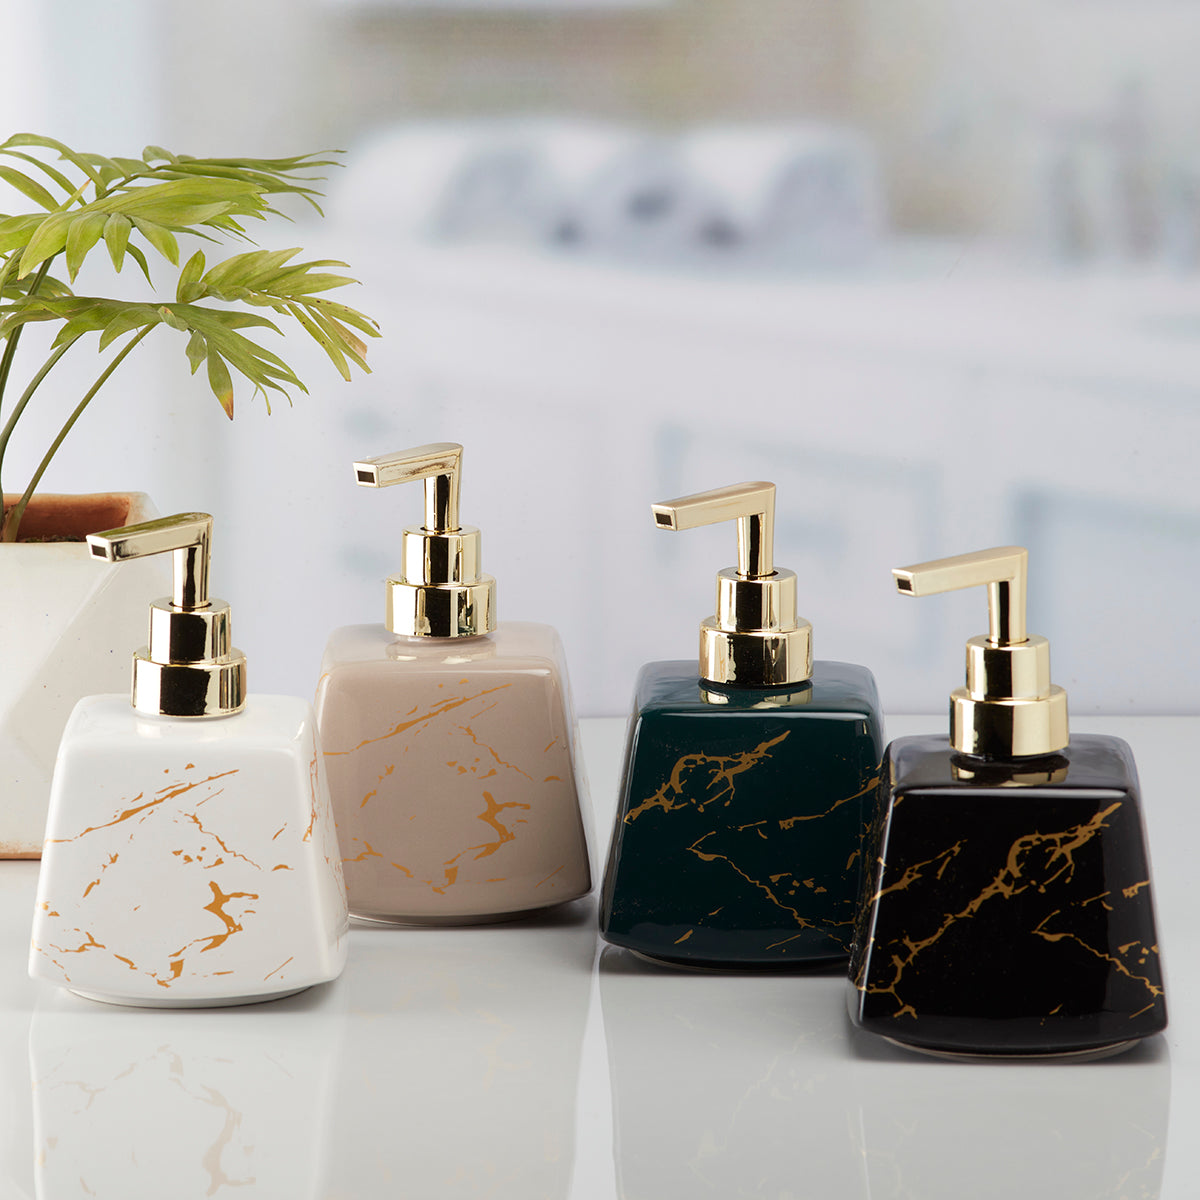 Ceramic Soap Dispenser handwash Pump for Bathroom, Set of 1, Green/Gold (10151)